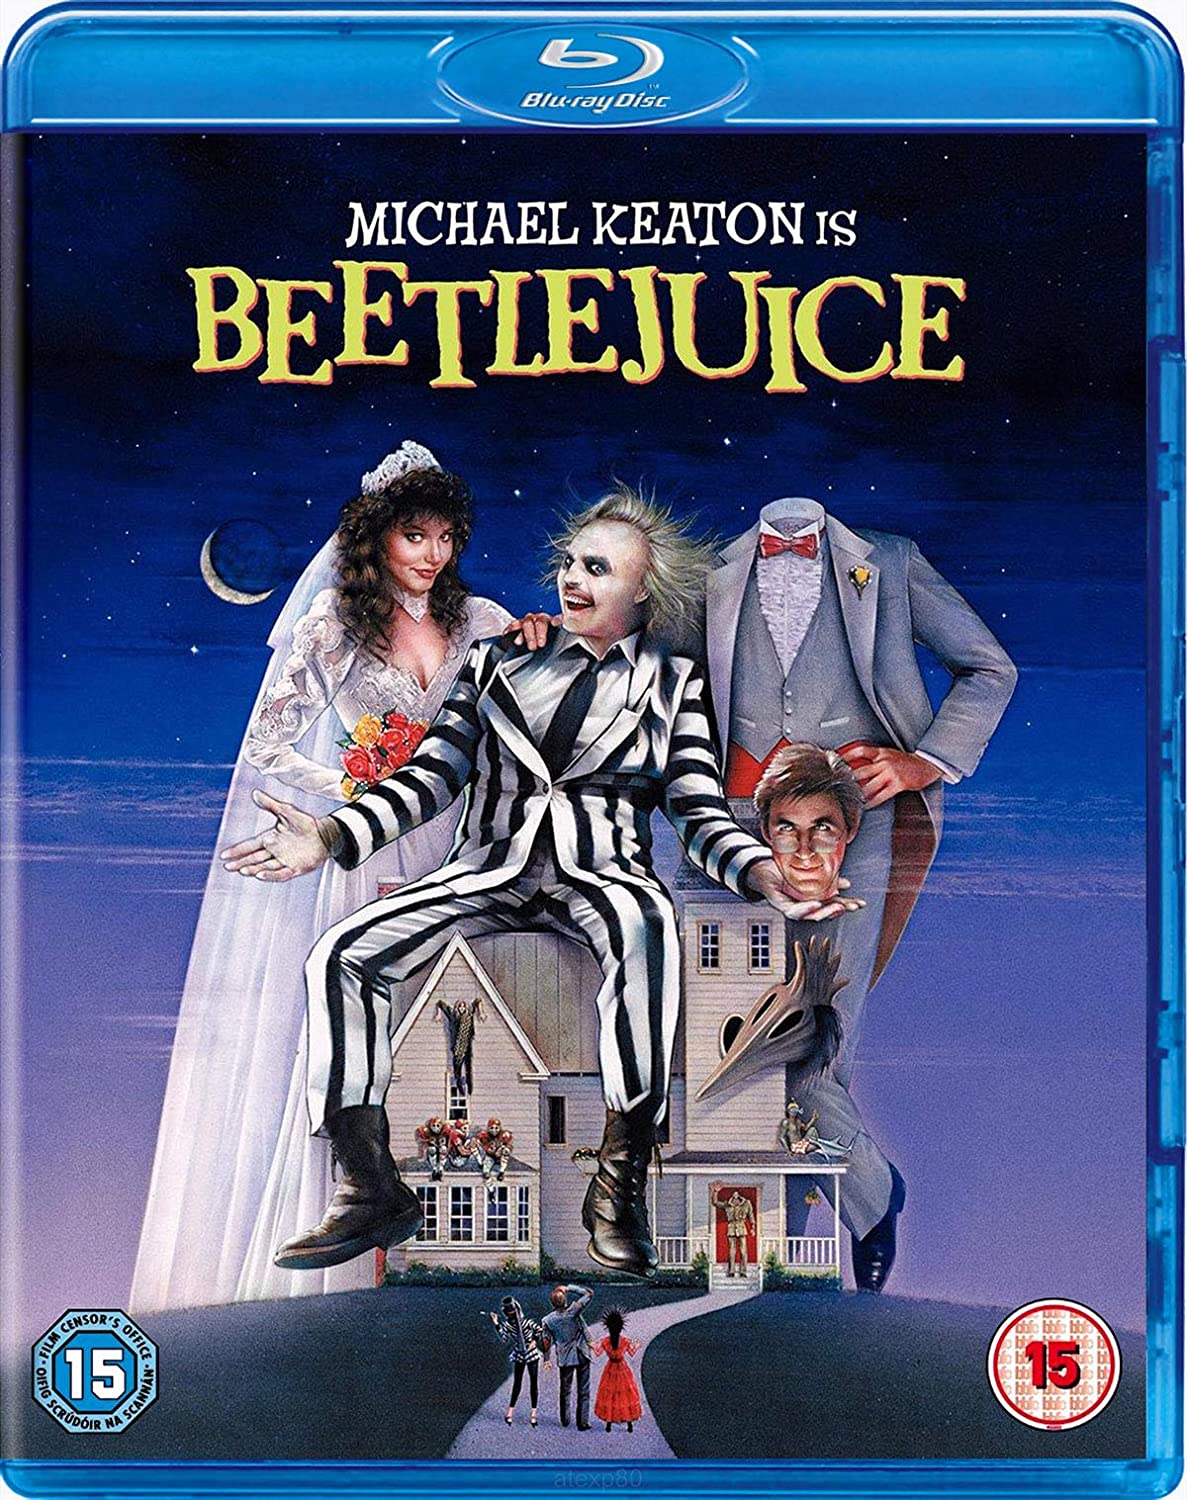 Beetlejuice movie